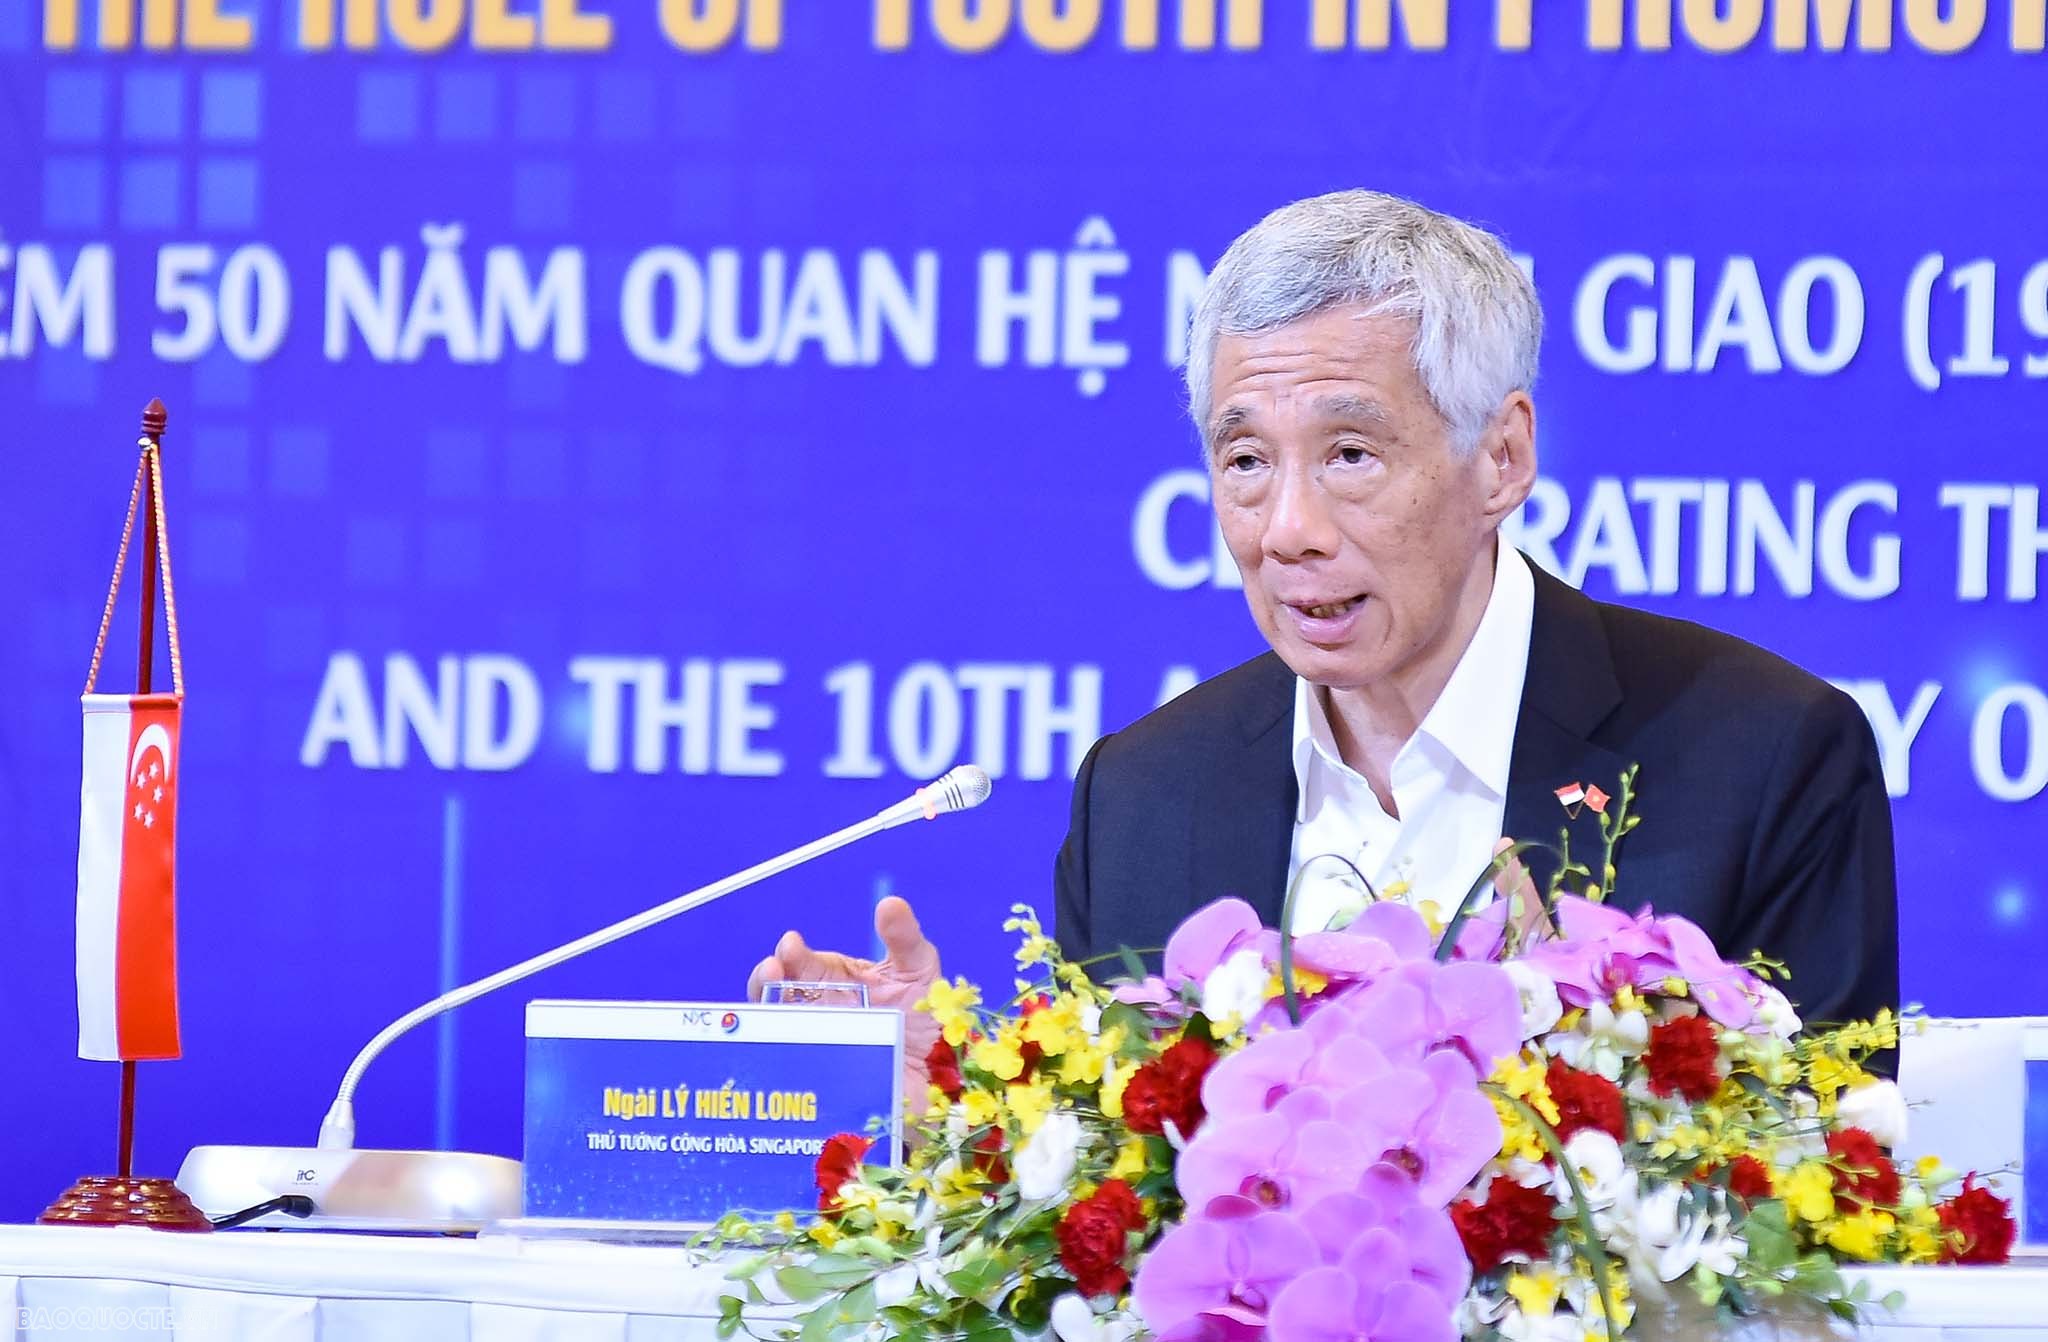 Vietnamese, Singaporean PMs meet with students in Hanoi